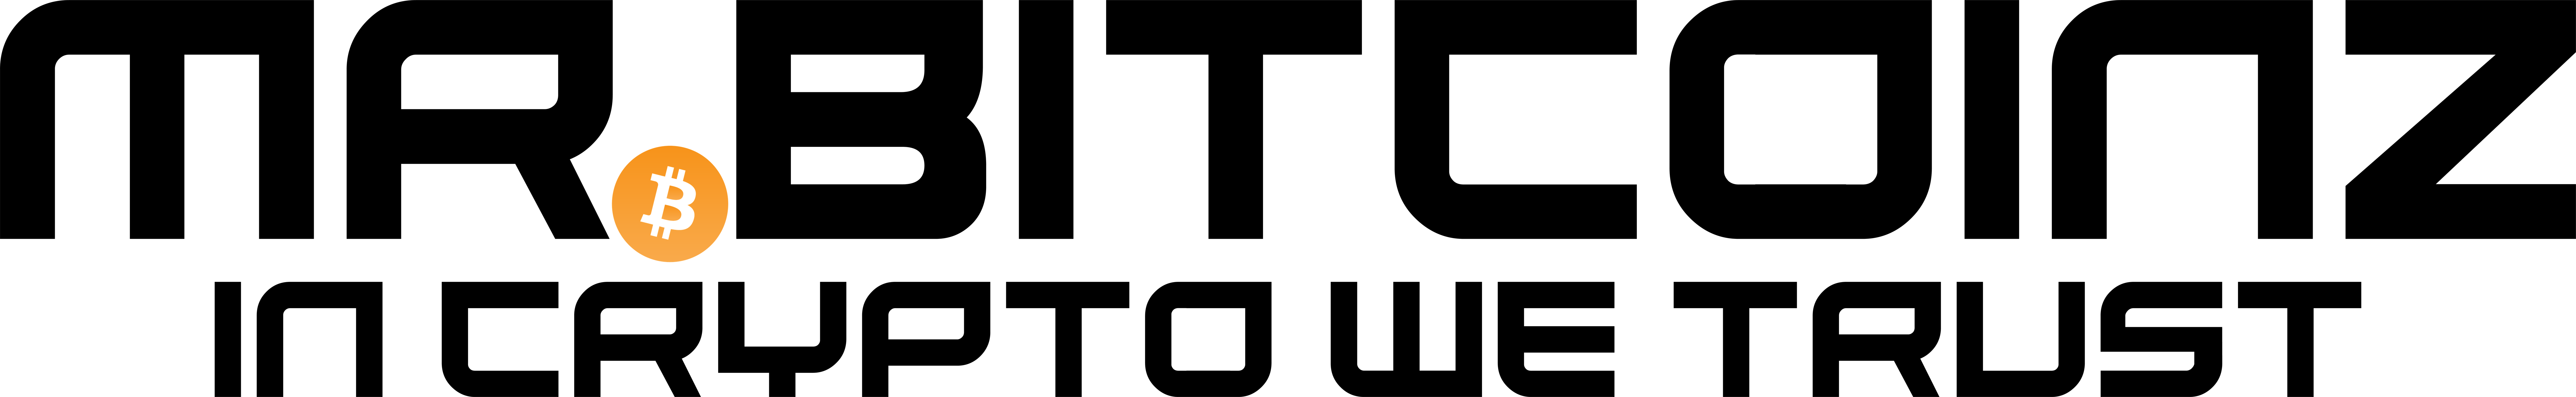 MrBitcoinz Logo